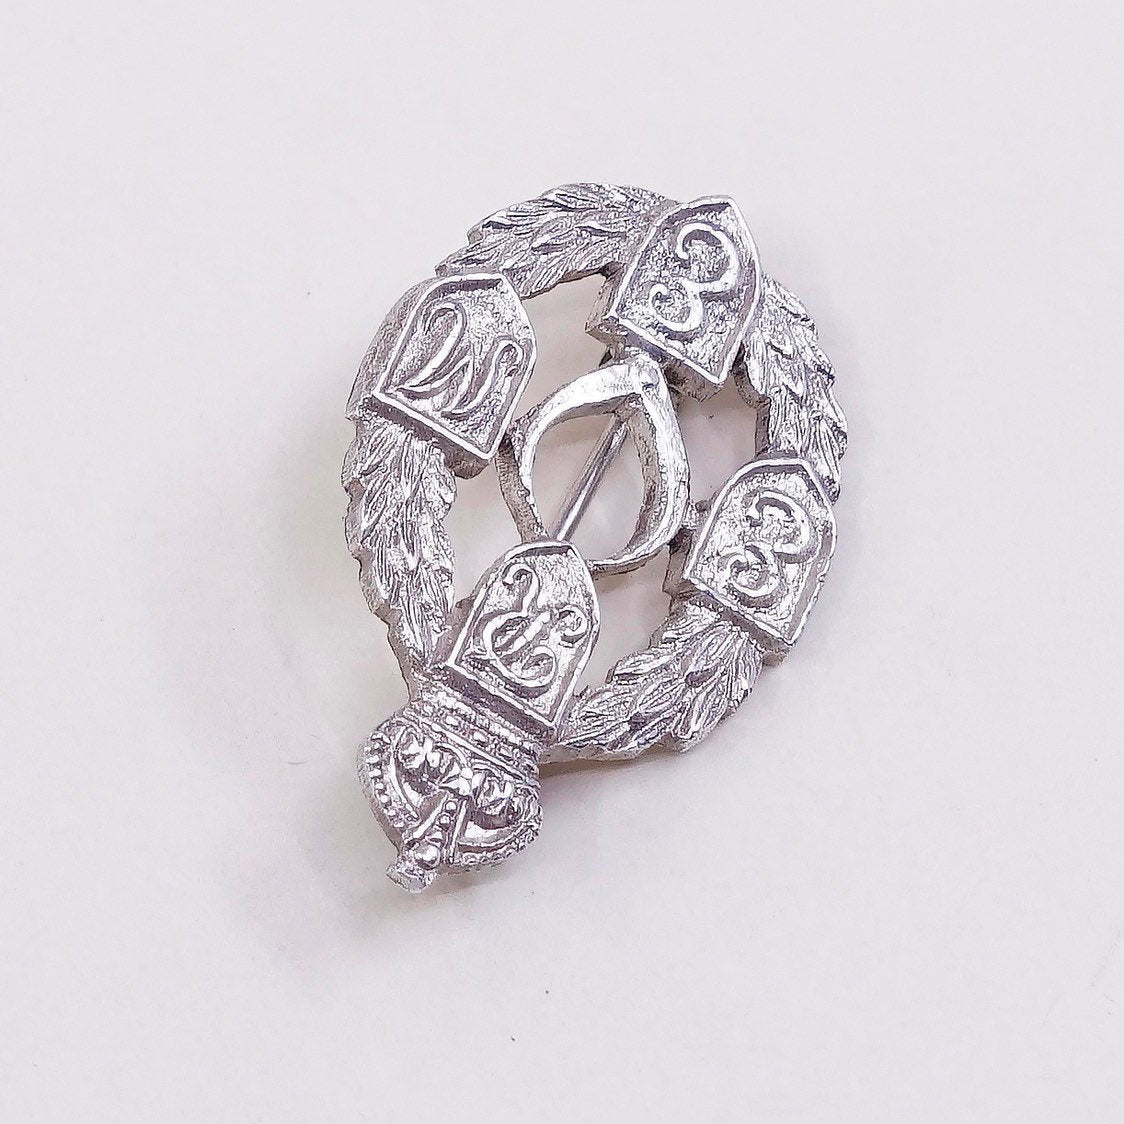 sterling 925 silver brooch, REME Royal Air Force King’s crown wings sweetheart